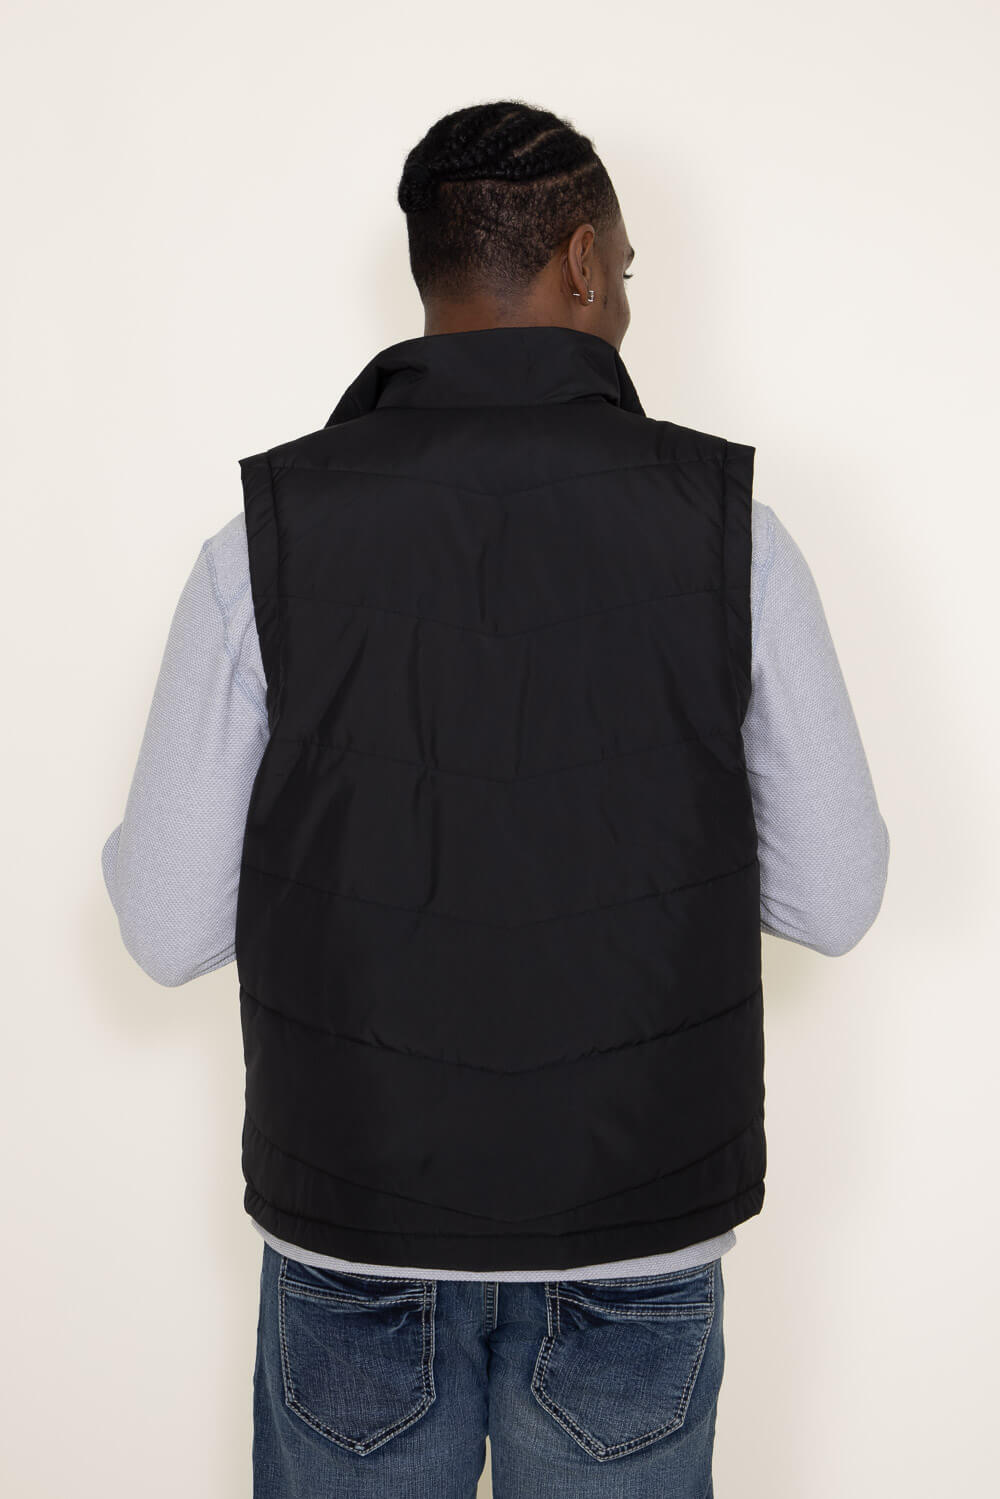 The North Face Apex Bionic Vest for Men in Black